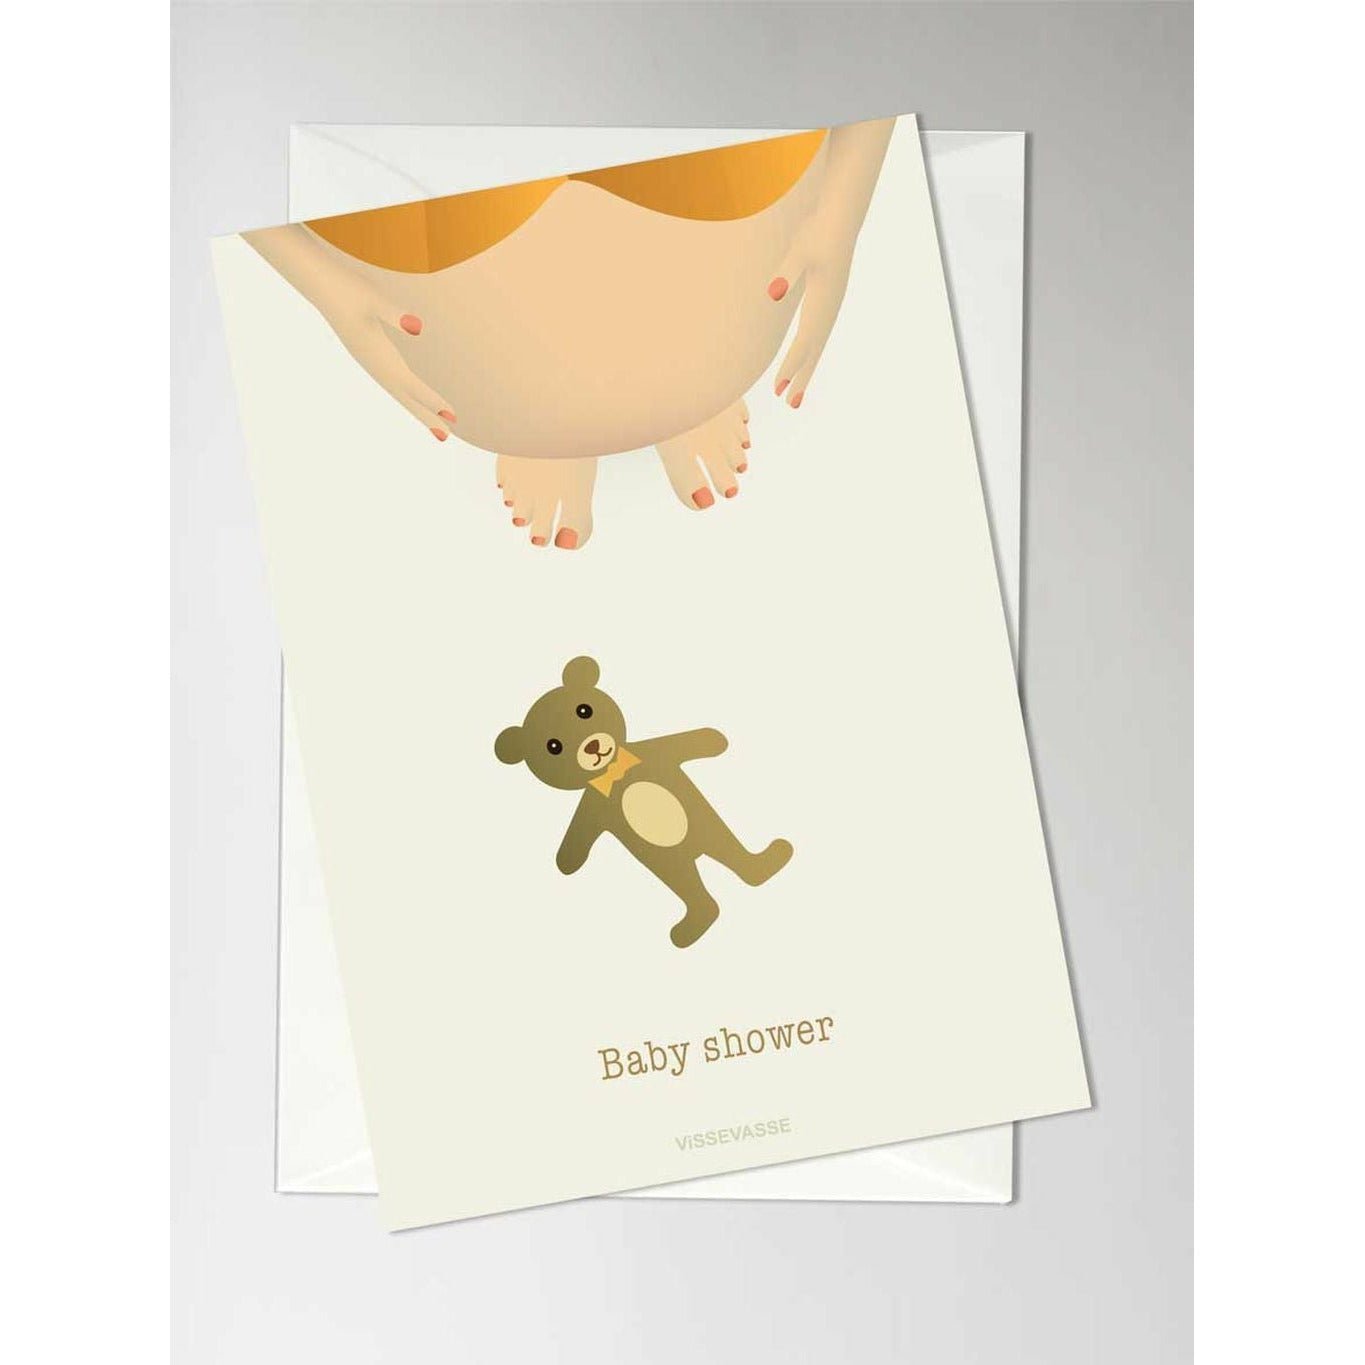 Vissevasse Baby Shower Grußkarte